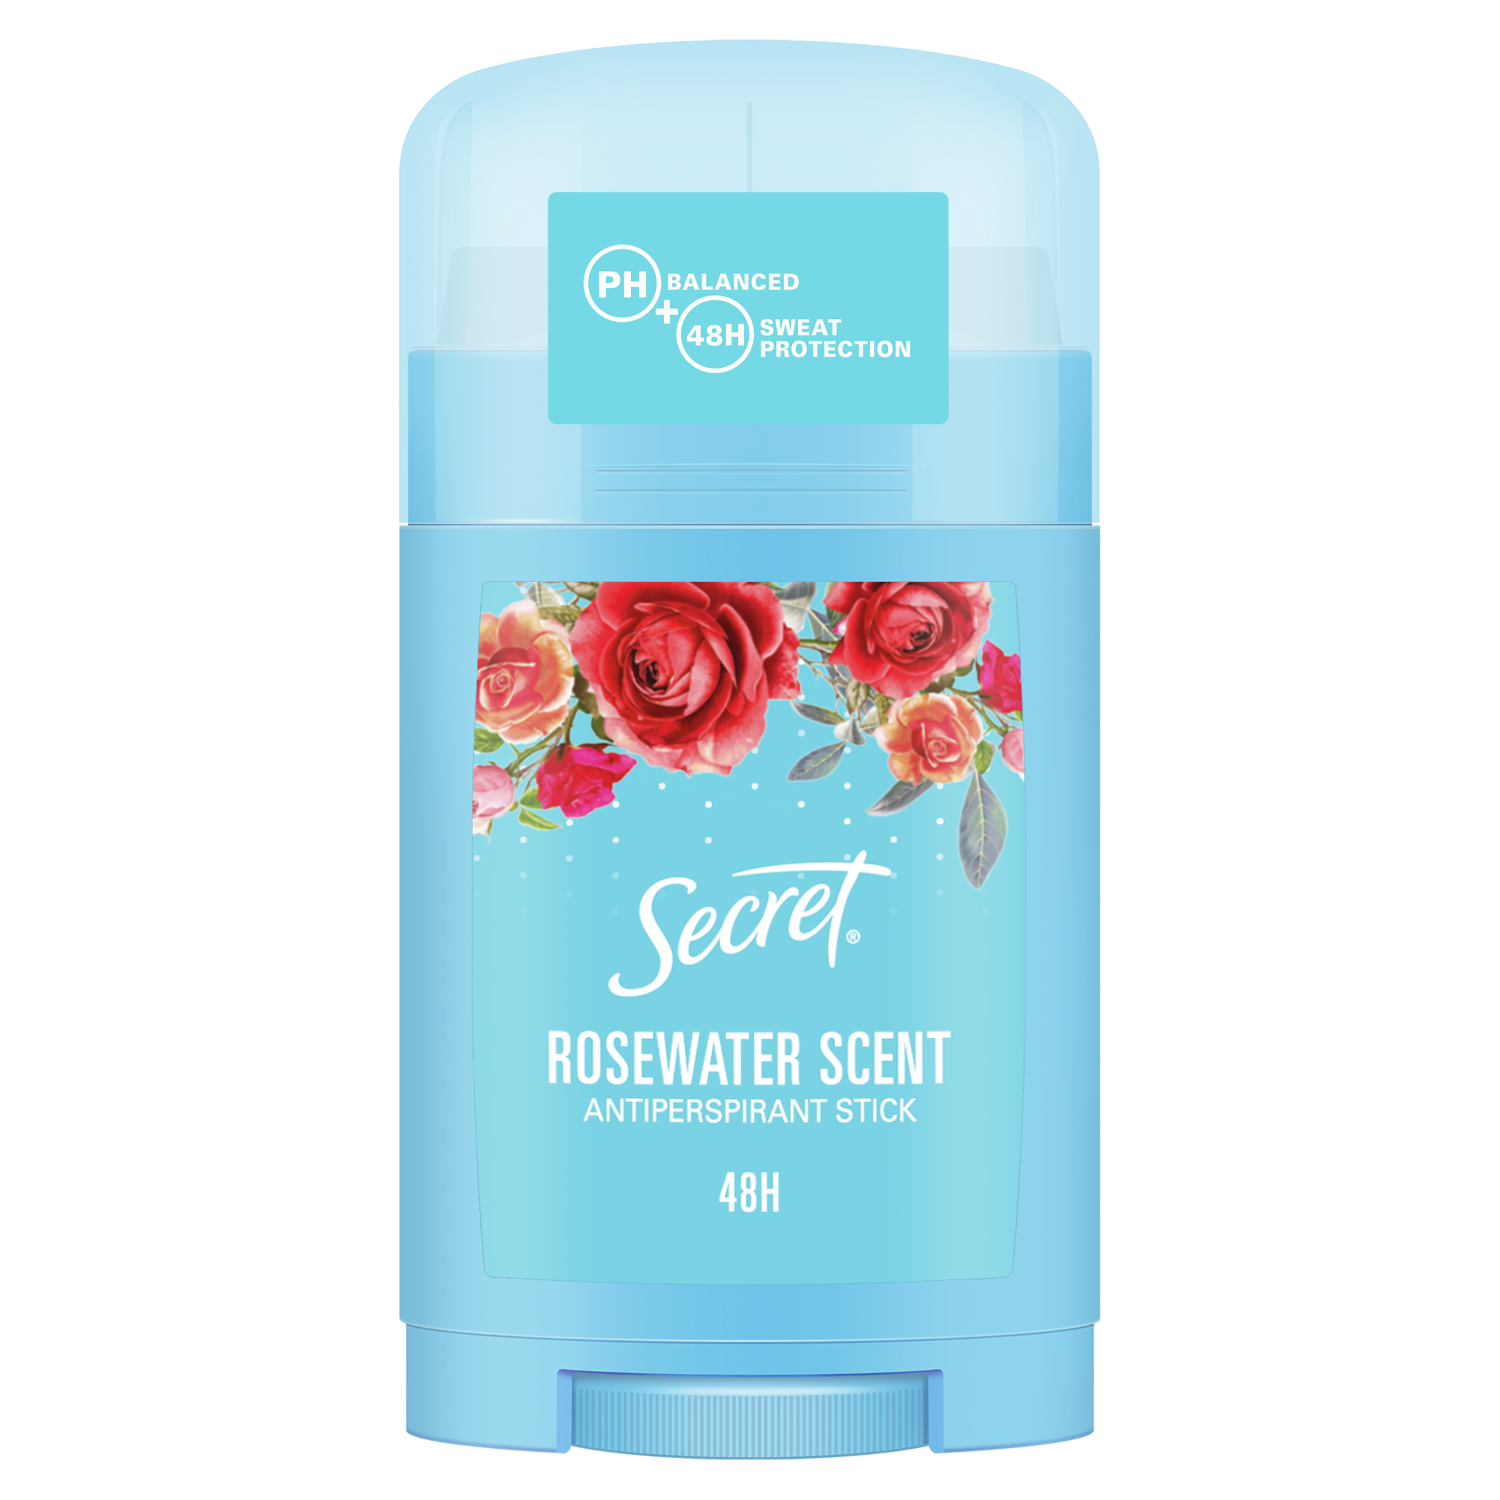 Secret Rosewater Scent стик-антиперспирант для женщин, 45 г secret rosewater scent розовая вода дезодорант антиперспирант кремовый 40 гр 2 штуки